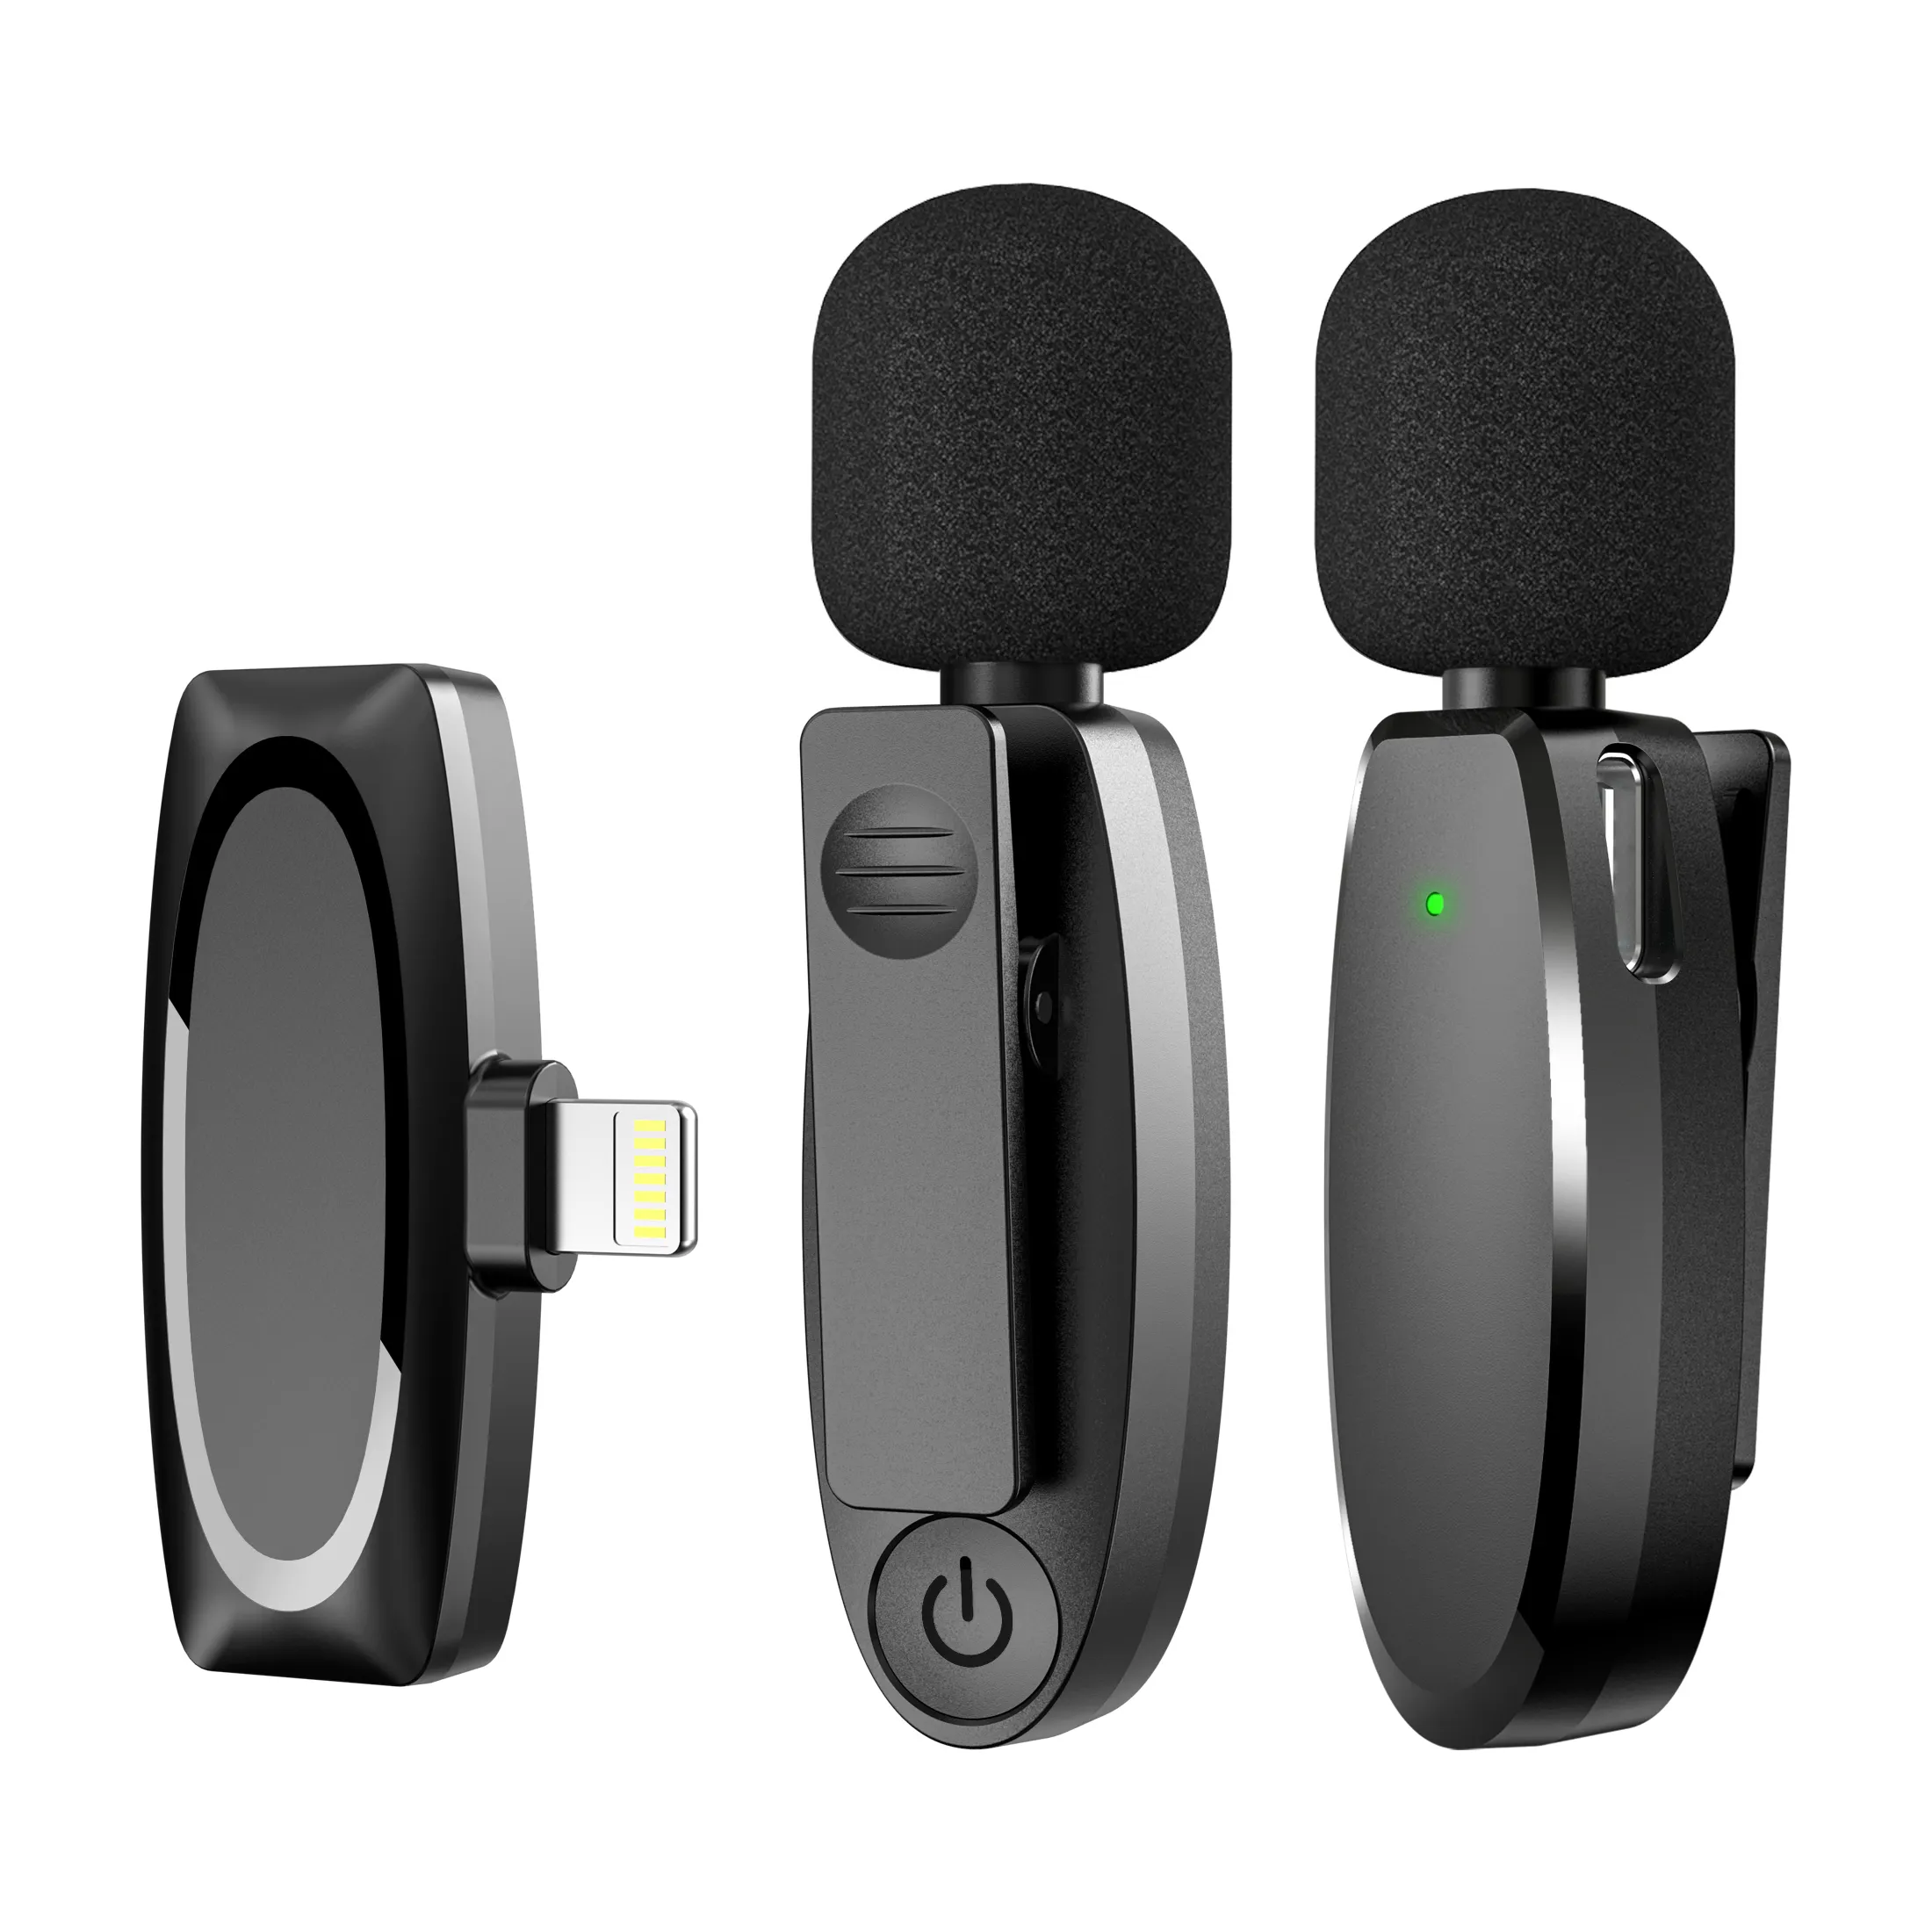 VIMAI New Mini Wireless Microphone Lapel Recording USB Wireless Microphone for iPhone Mobile Phones